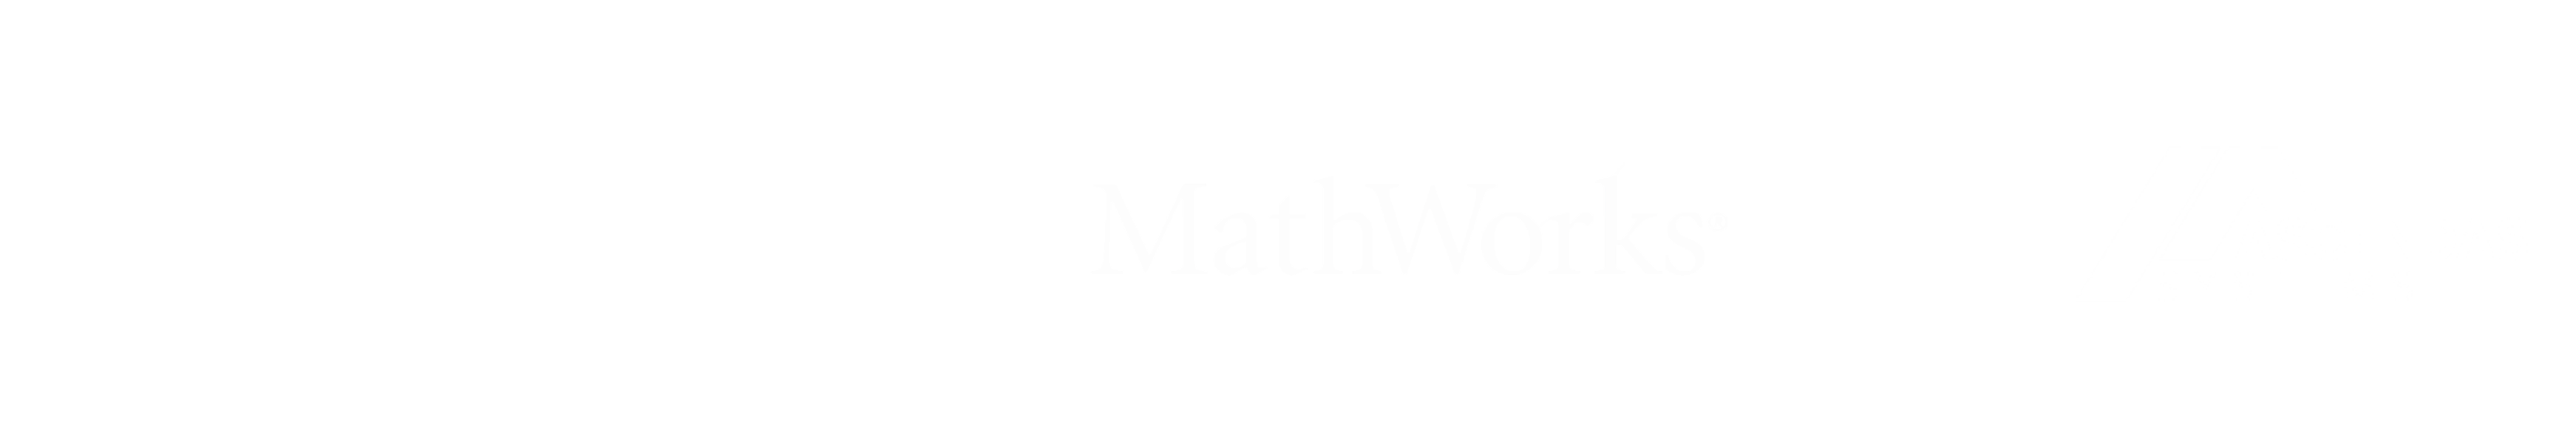 TechSource + MathWorks + Ascendas logos